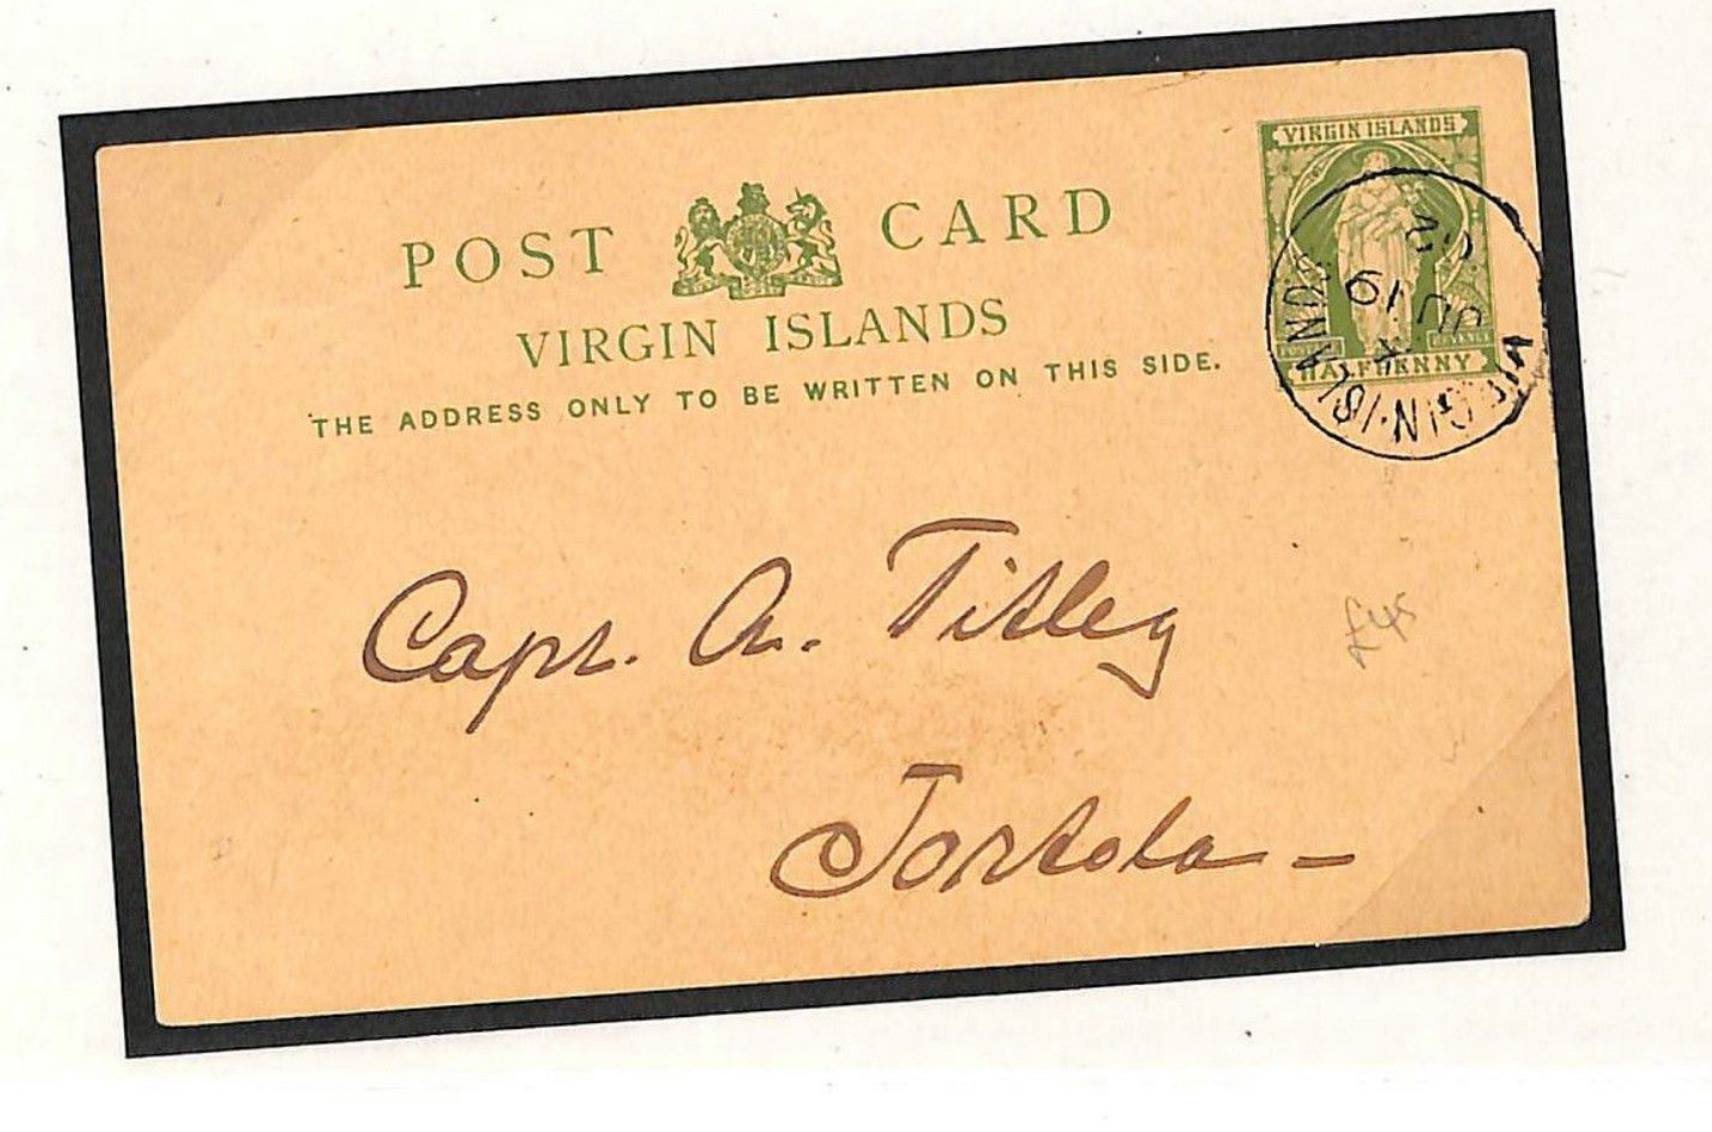 Postcards in the British Virgin Islands ~ 1902